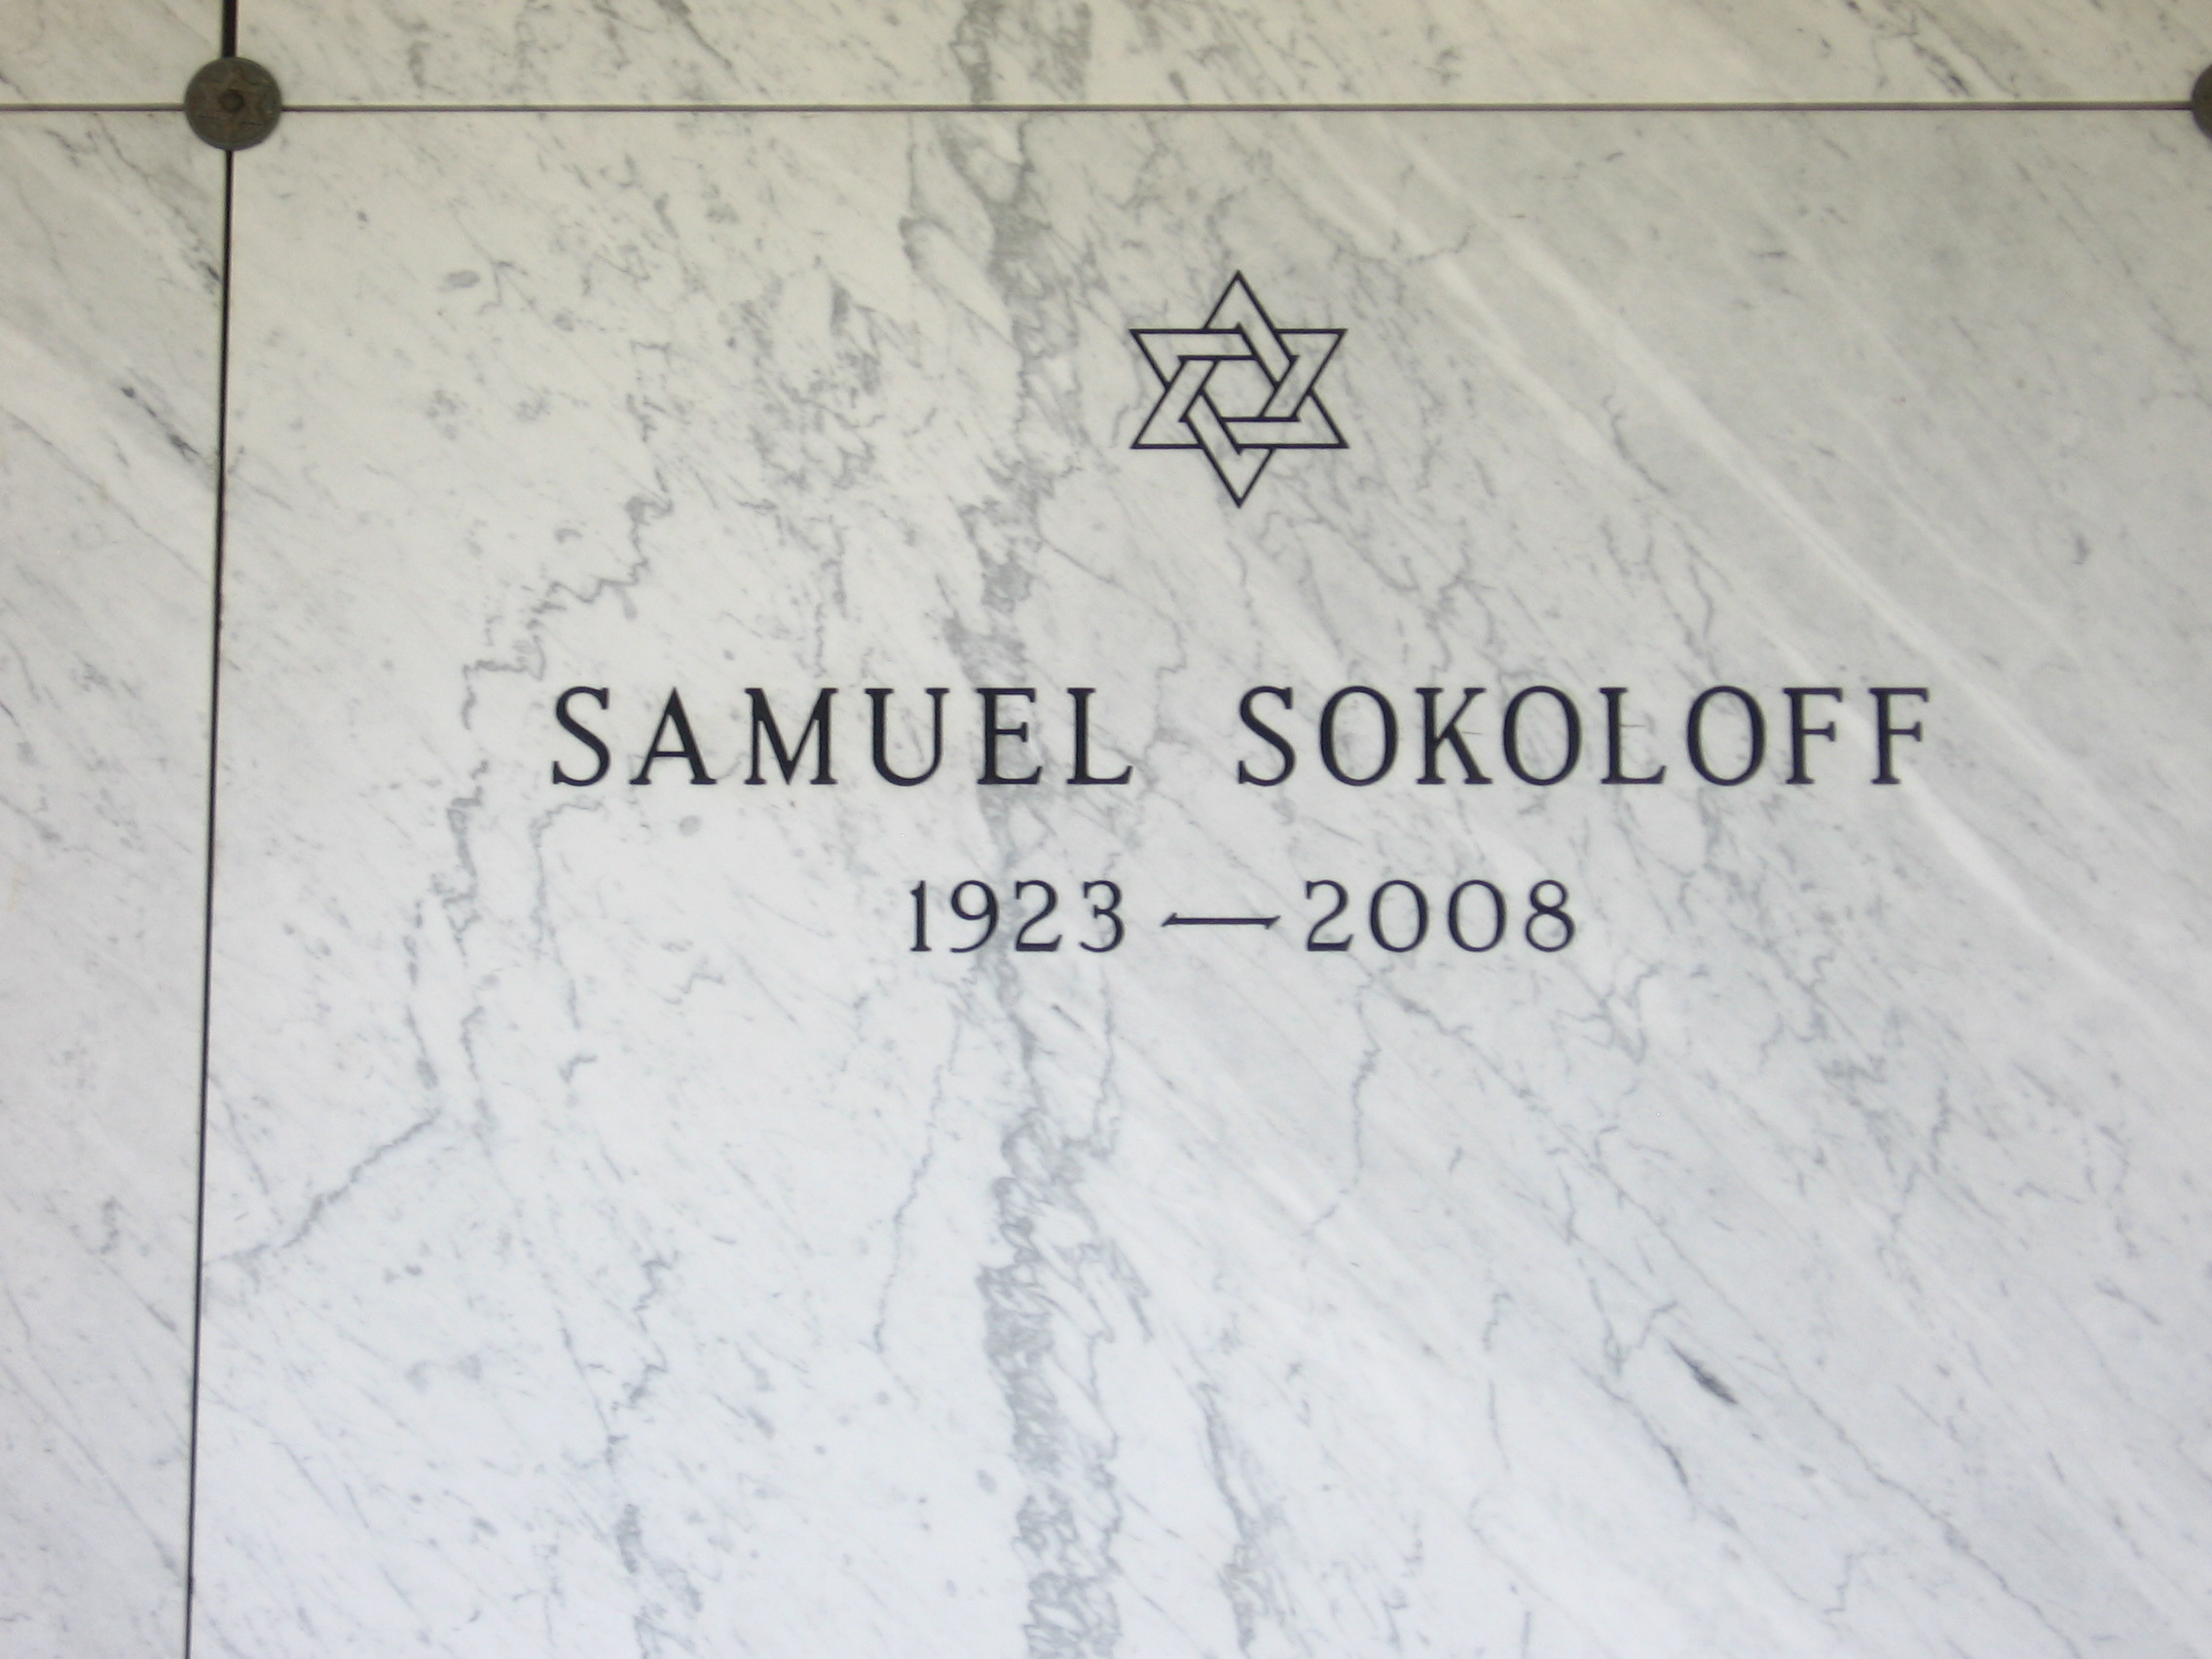 Samuel Sokoloff